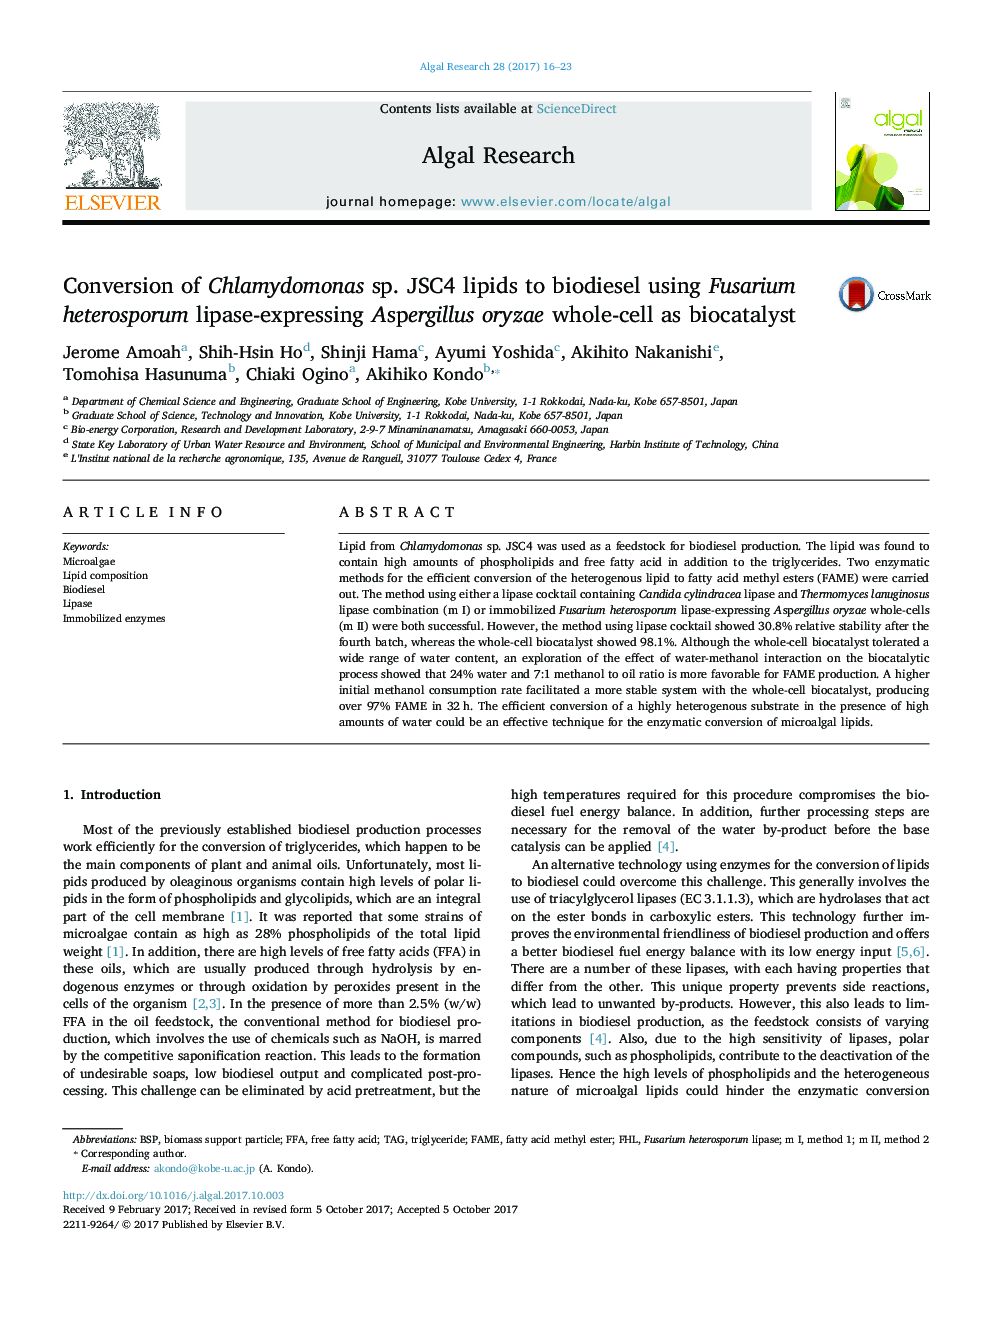 Conversion of Chlamydomonas sp. JSC4 lipids to biodiesel using Fusarium heterosporum lipase-expressing Aspergillus oryzae whole-cell as biocatalyst